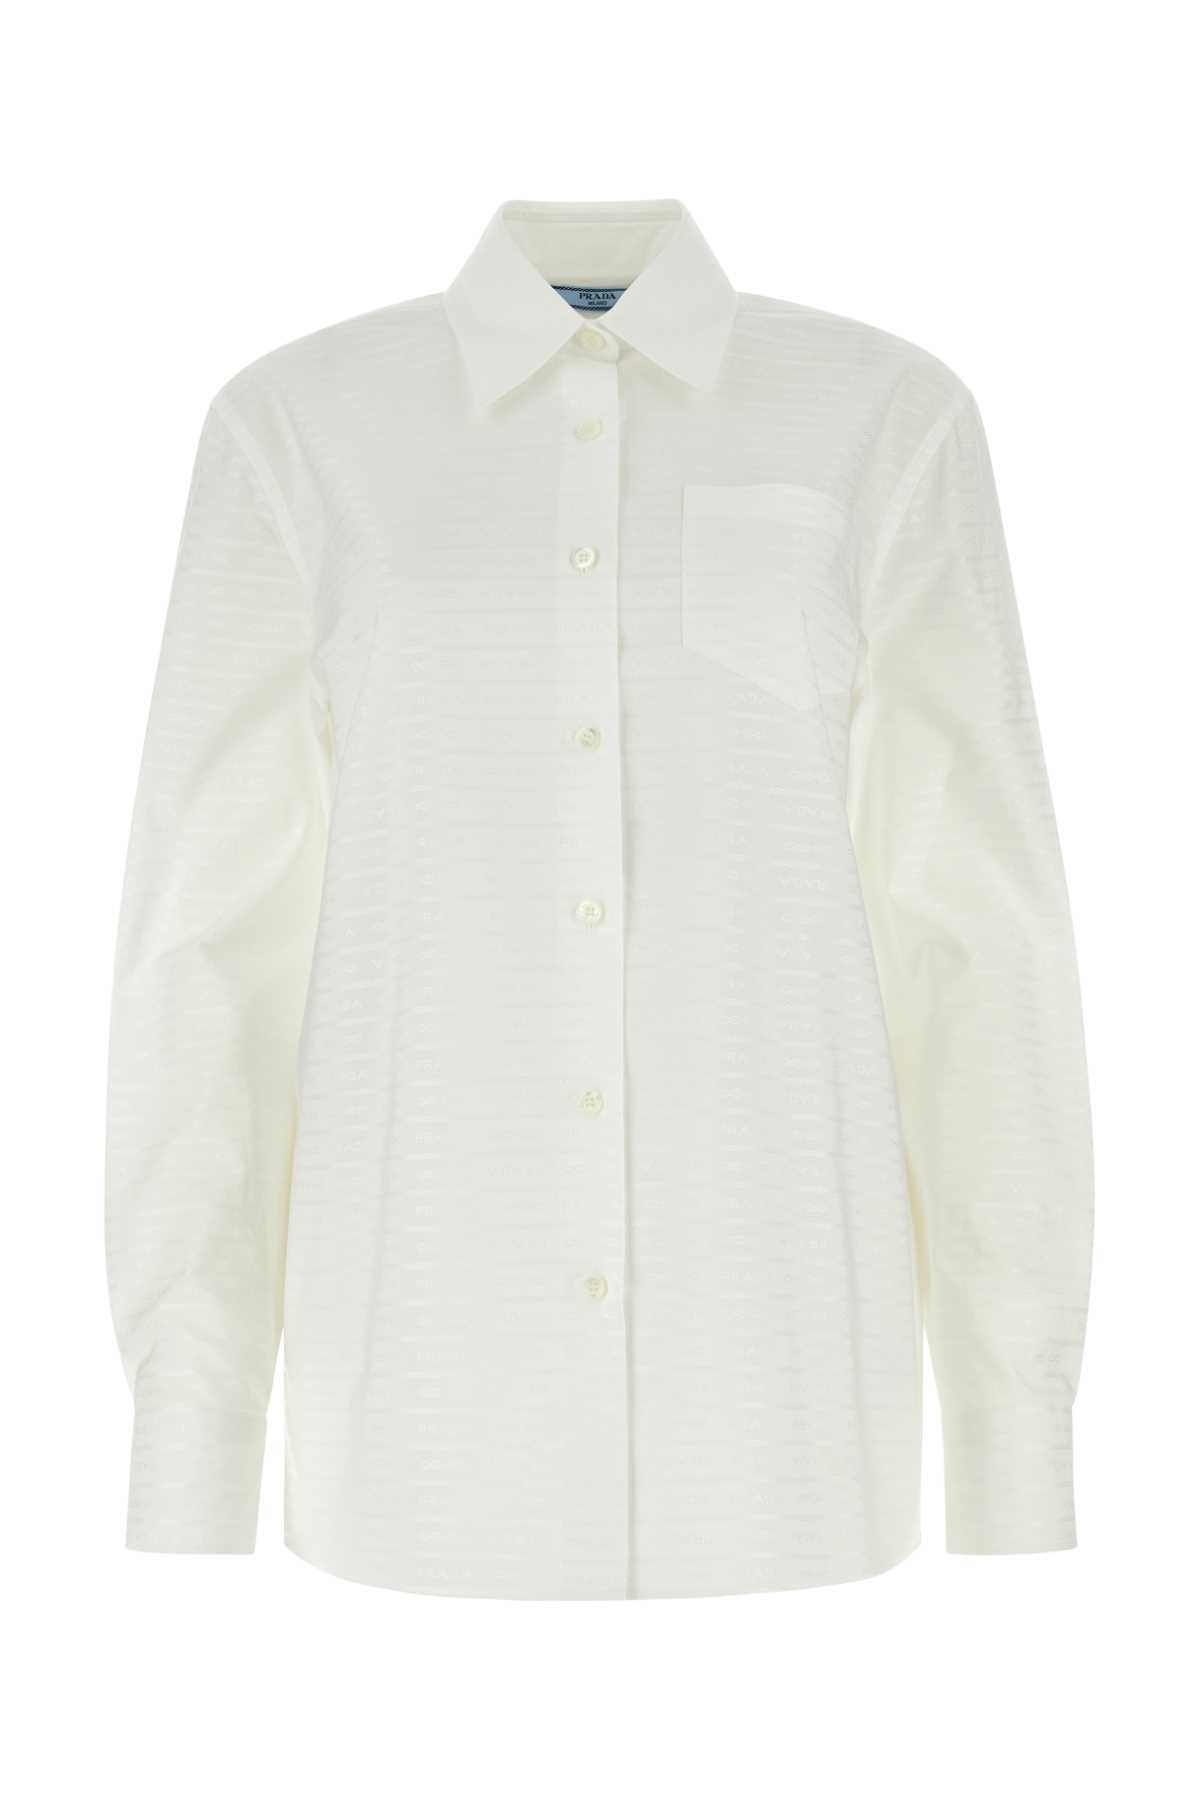 Prada White Cotton Shirt